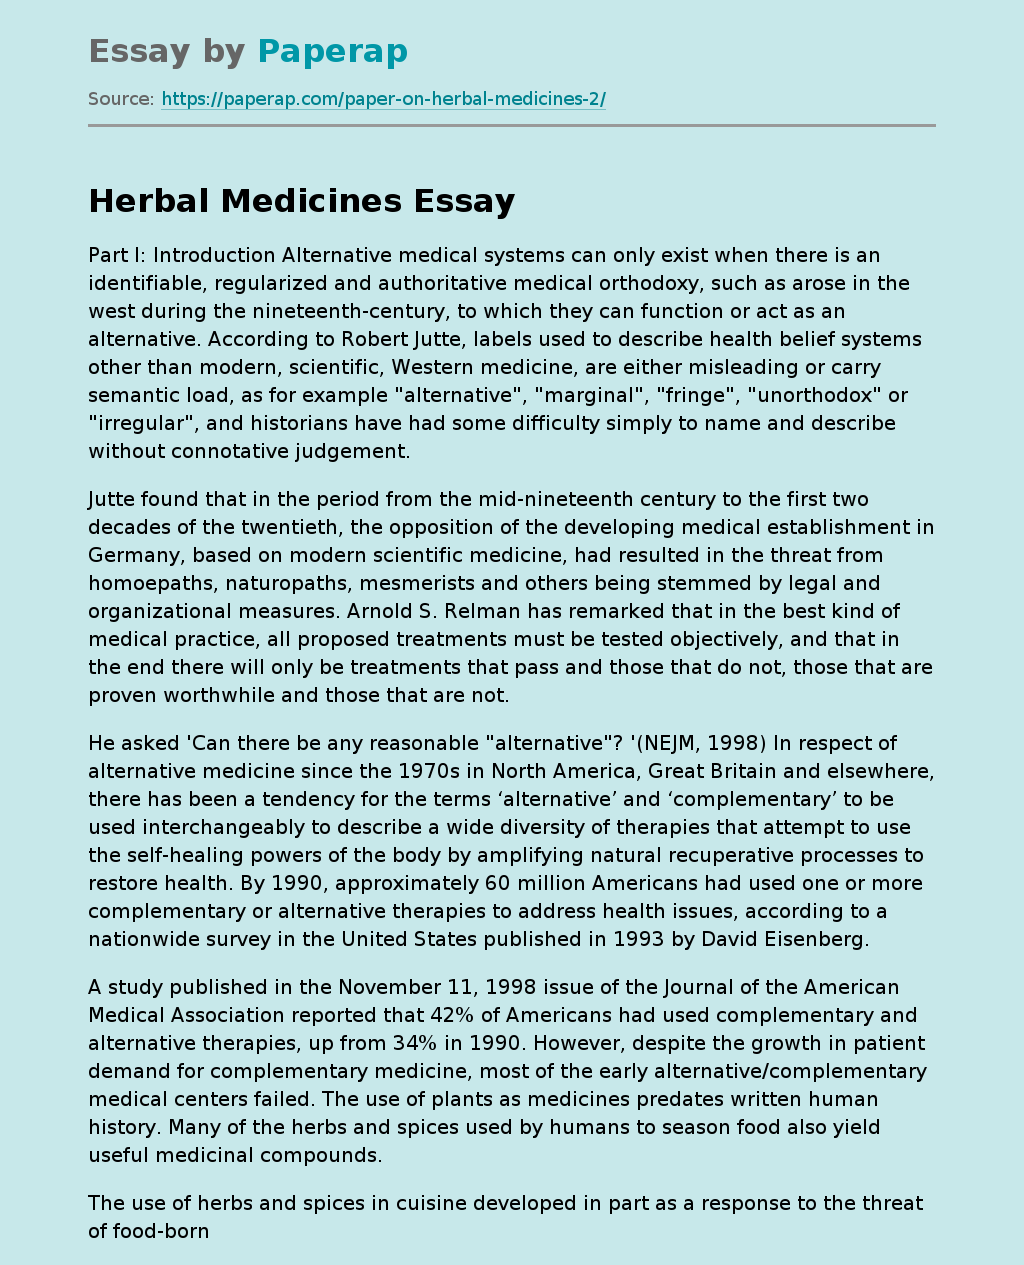 argumentative essay on herbal medicine is better than conventional medicine